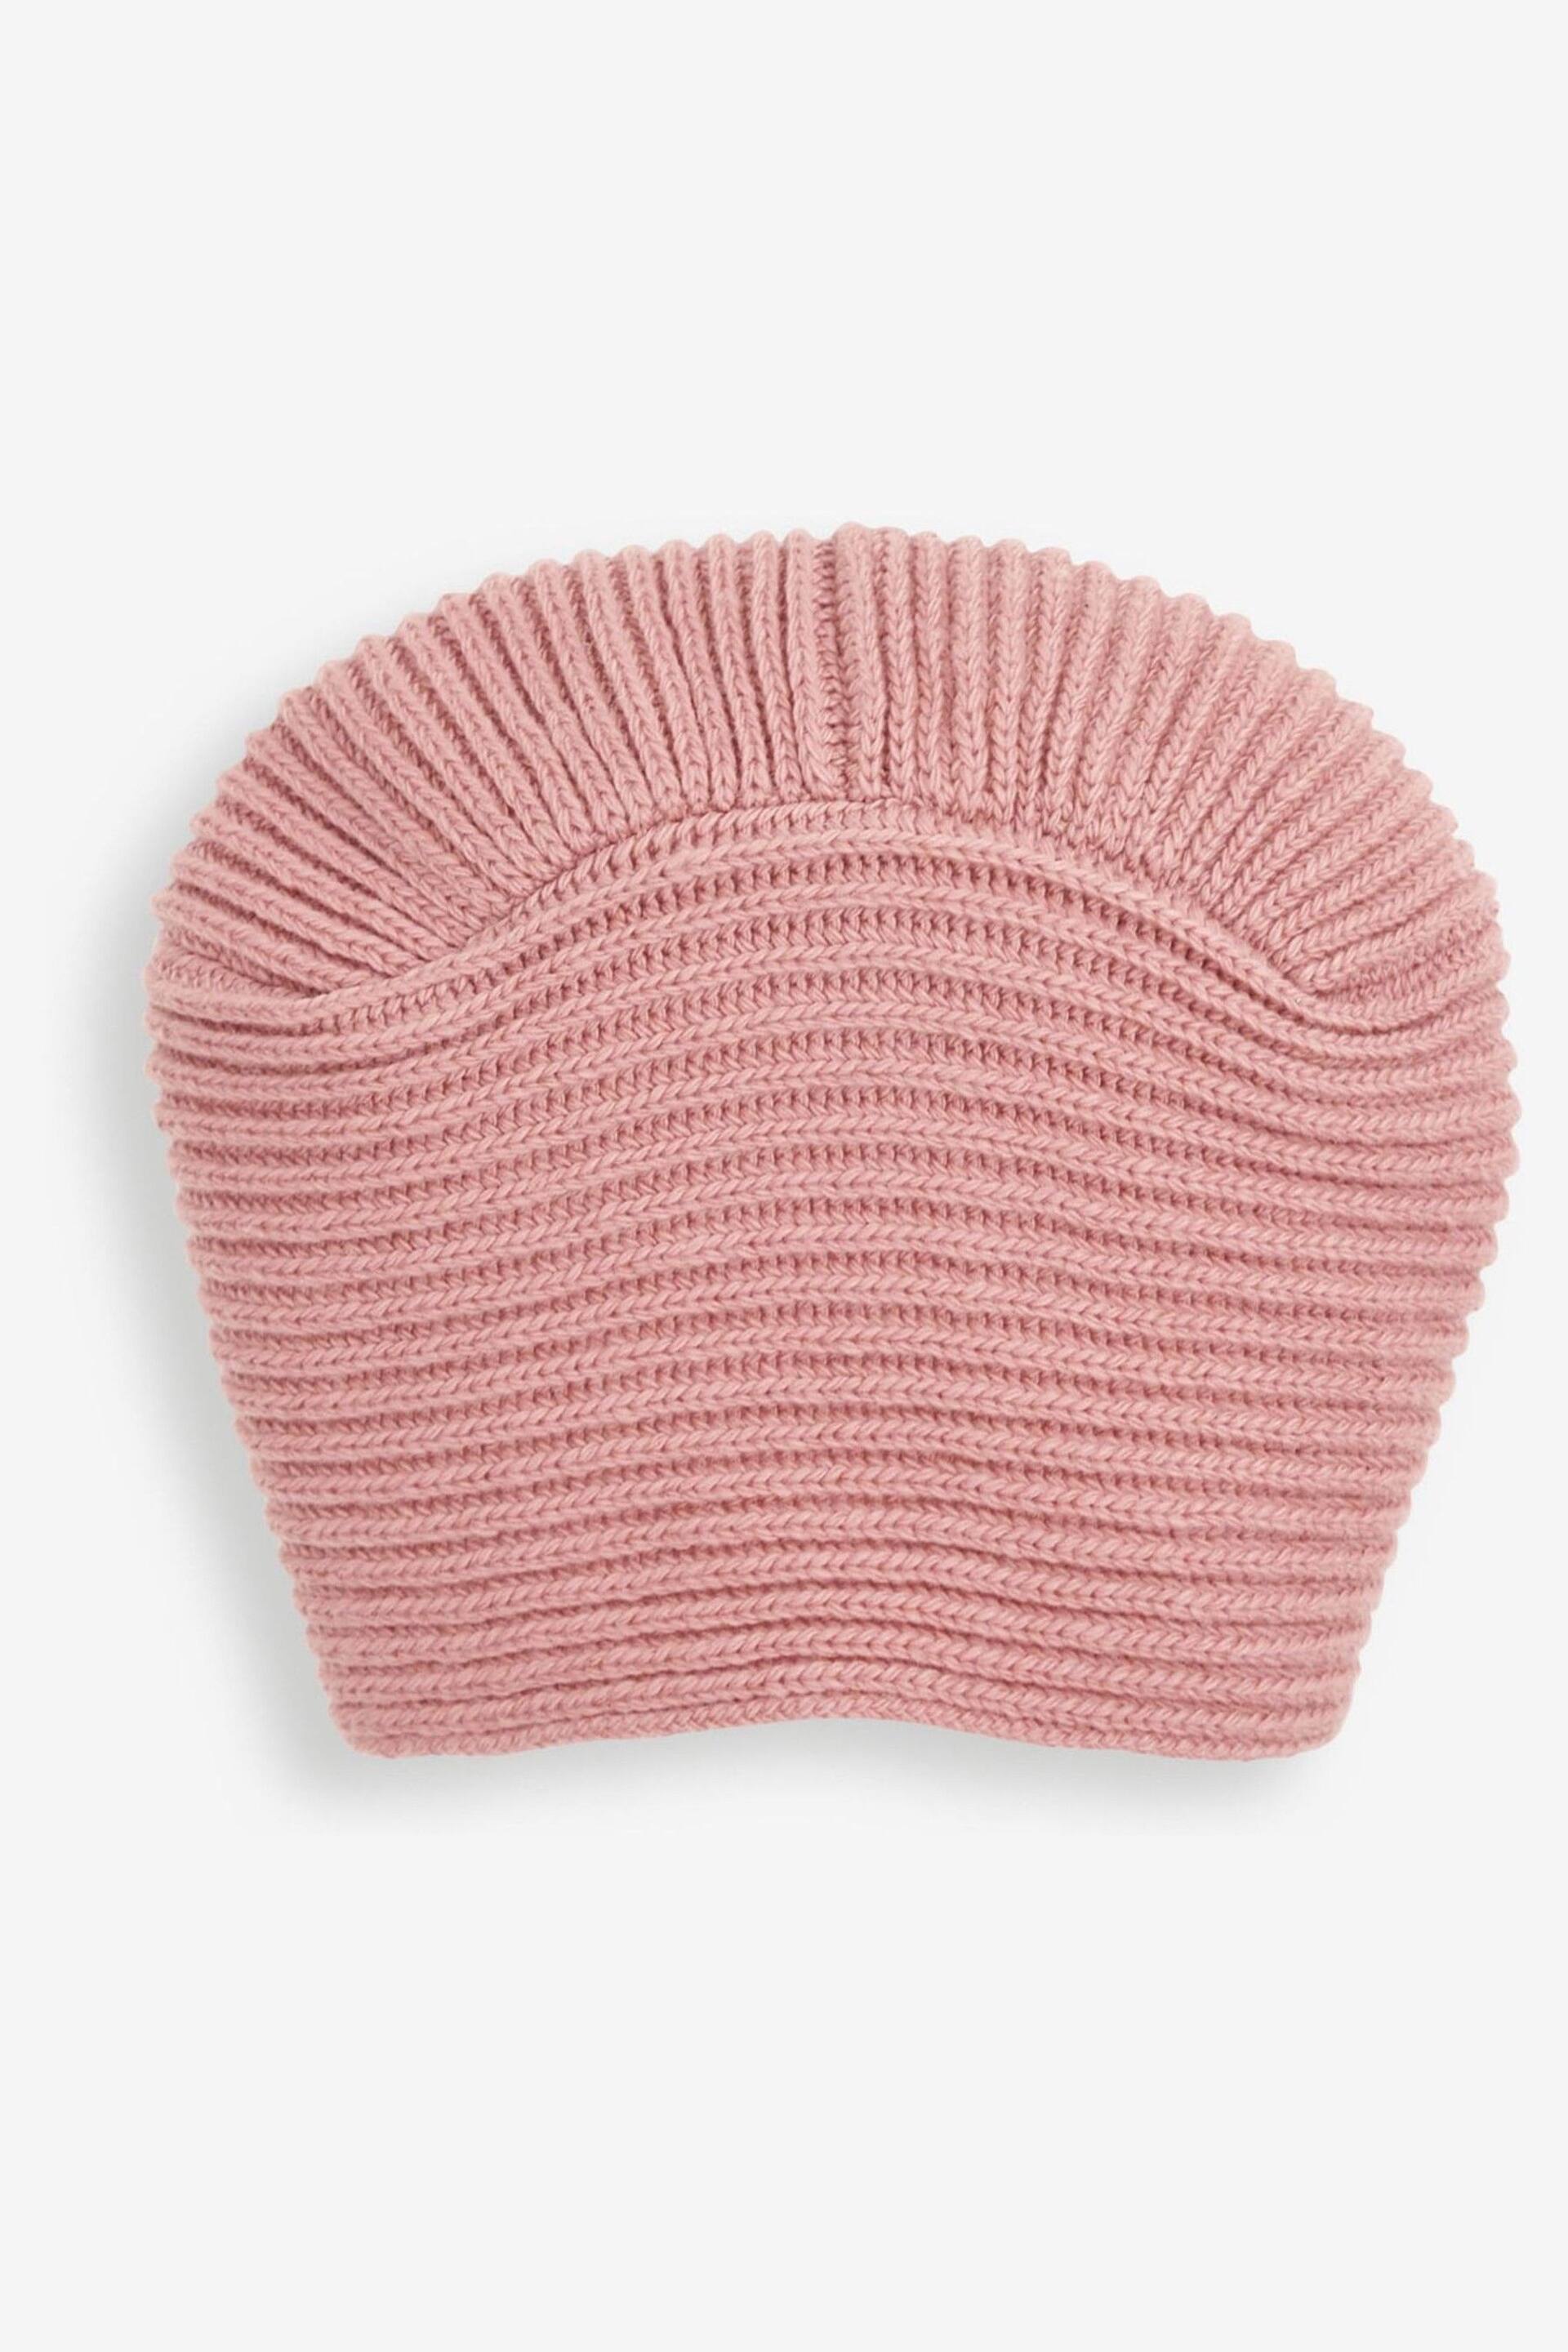 JoJo Maman Bébé Pink Girls' Knitted Turban - Image 2 of 2